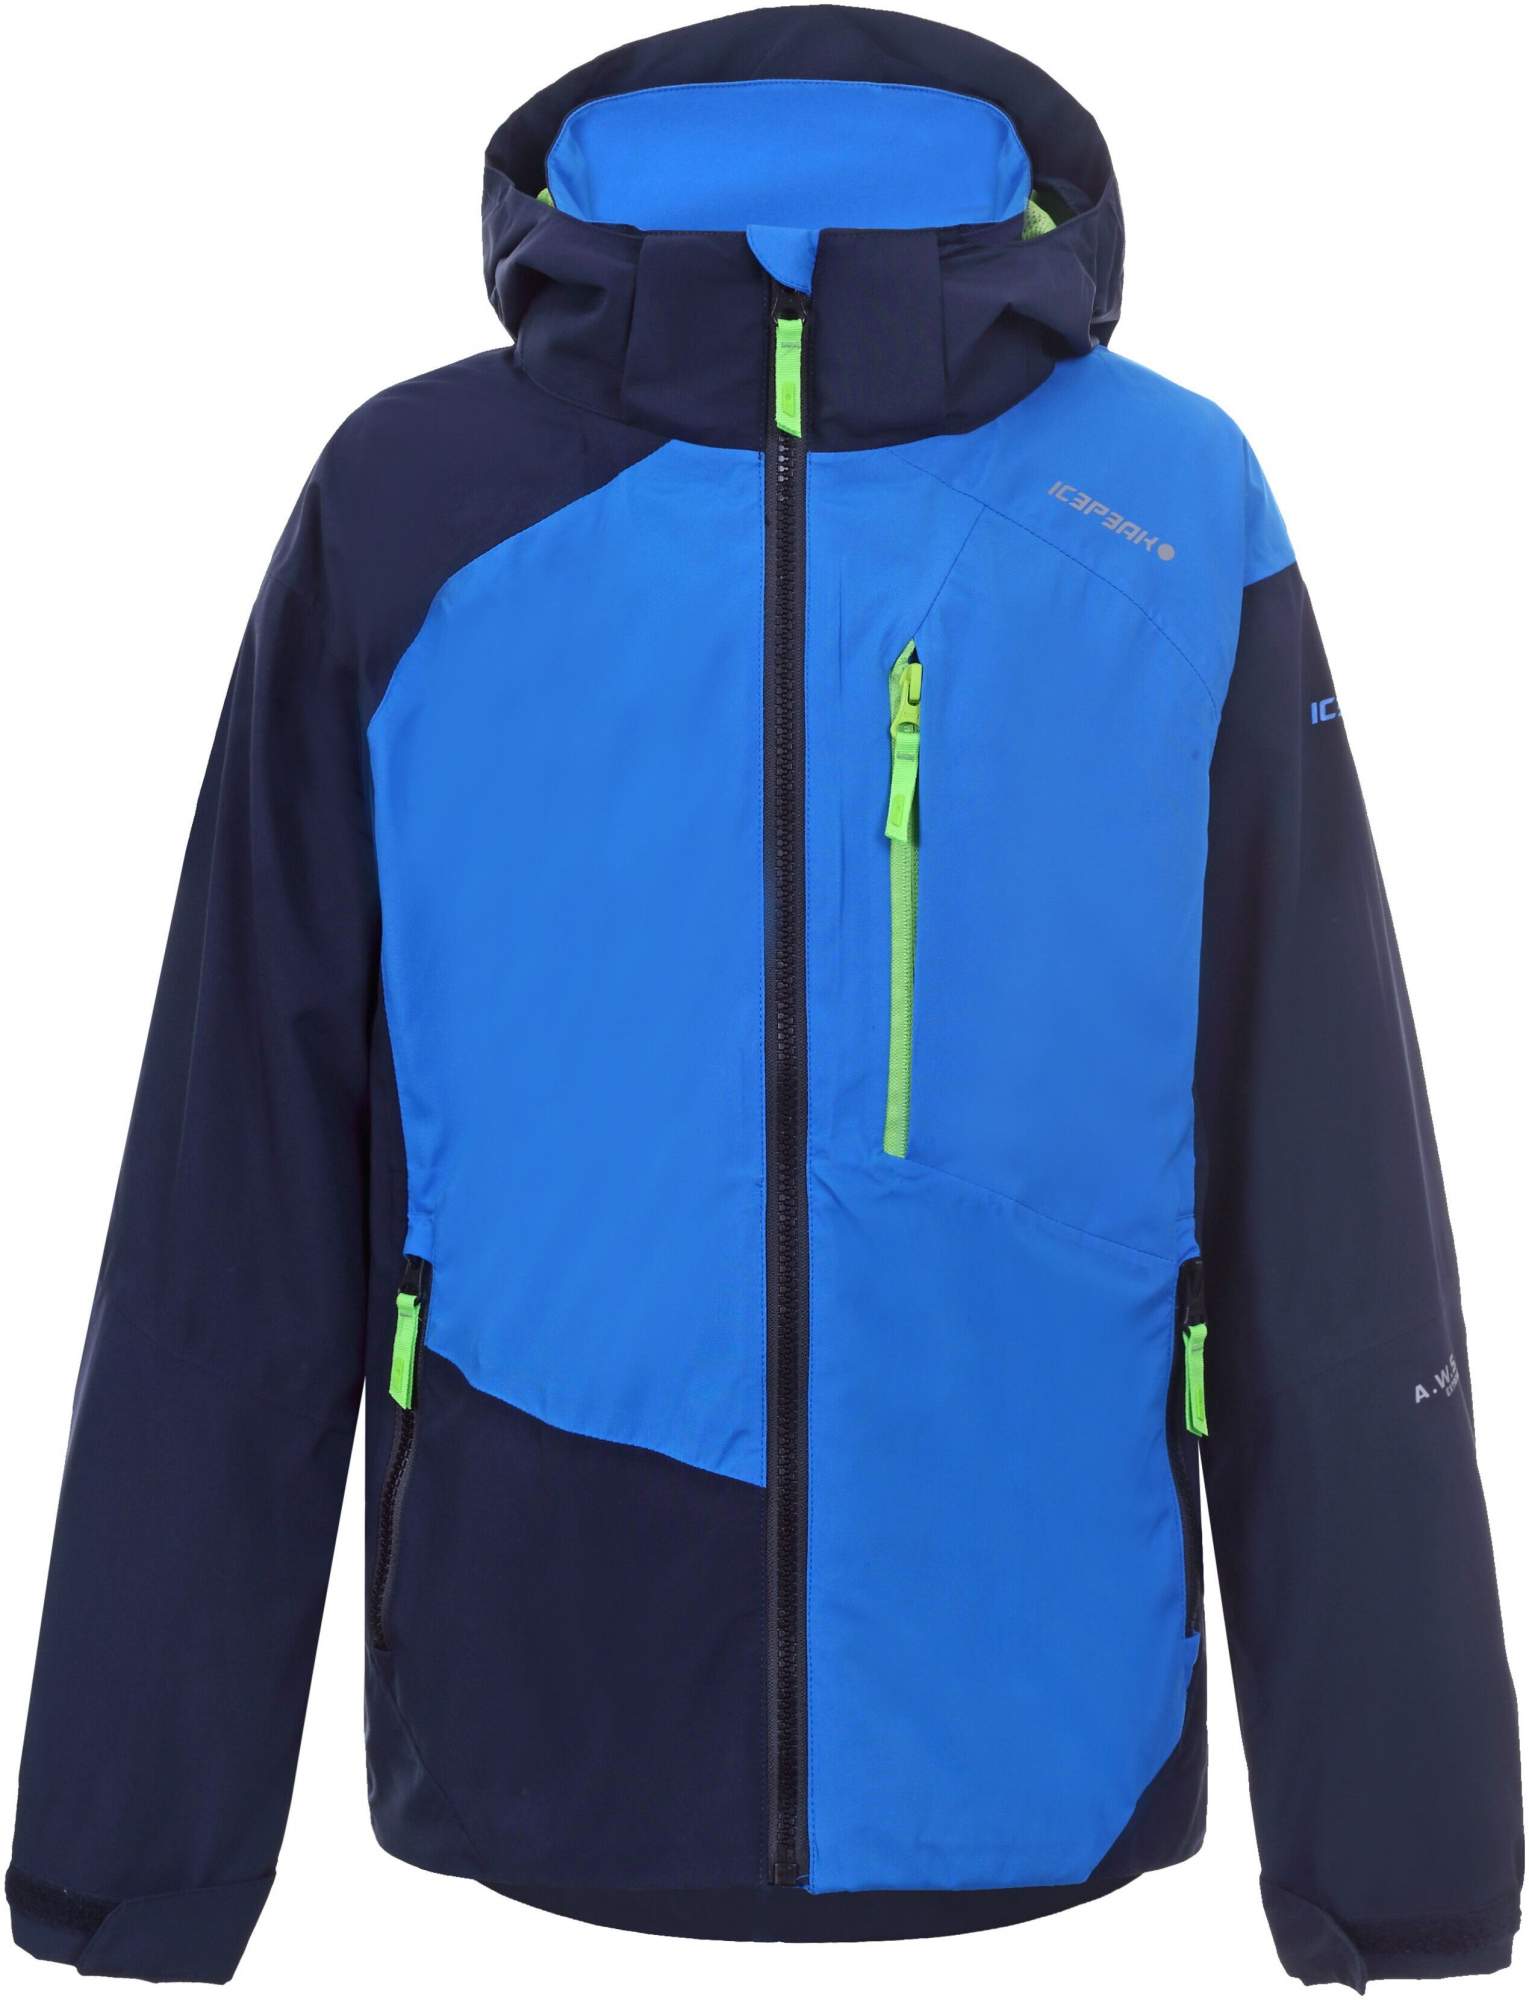 Куртка Для Активного Отдыха Icepeak 2020 Kalkar Jr Royal Blue (Рост:128)